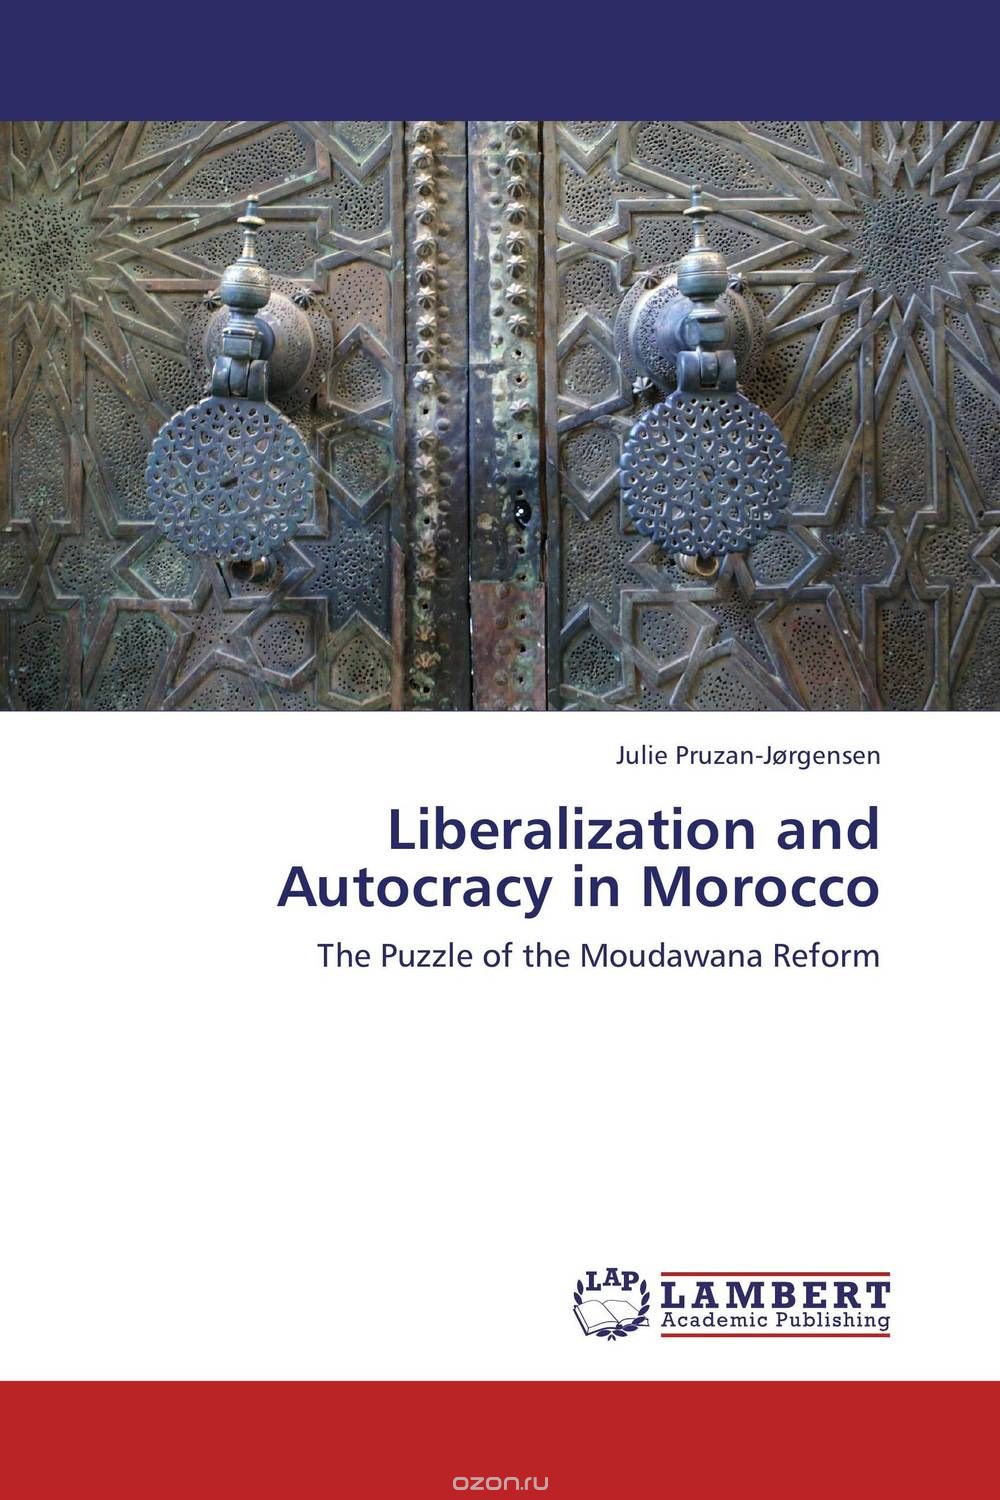 Скачать книгу "Liberalization and Autocracy in Morocco"